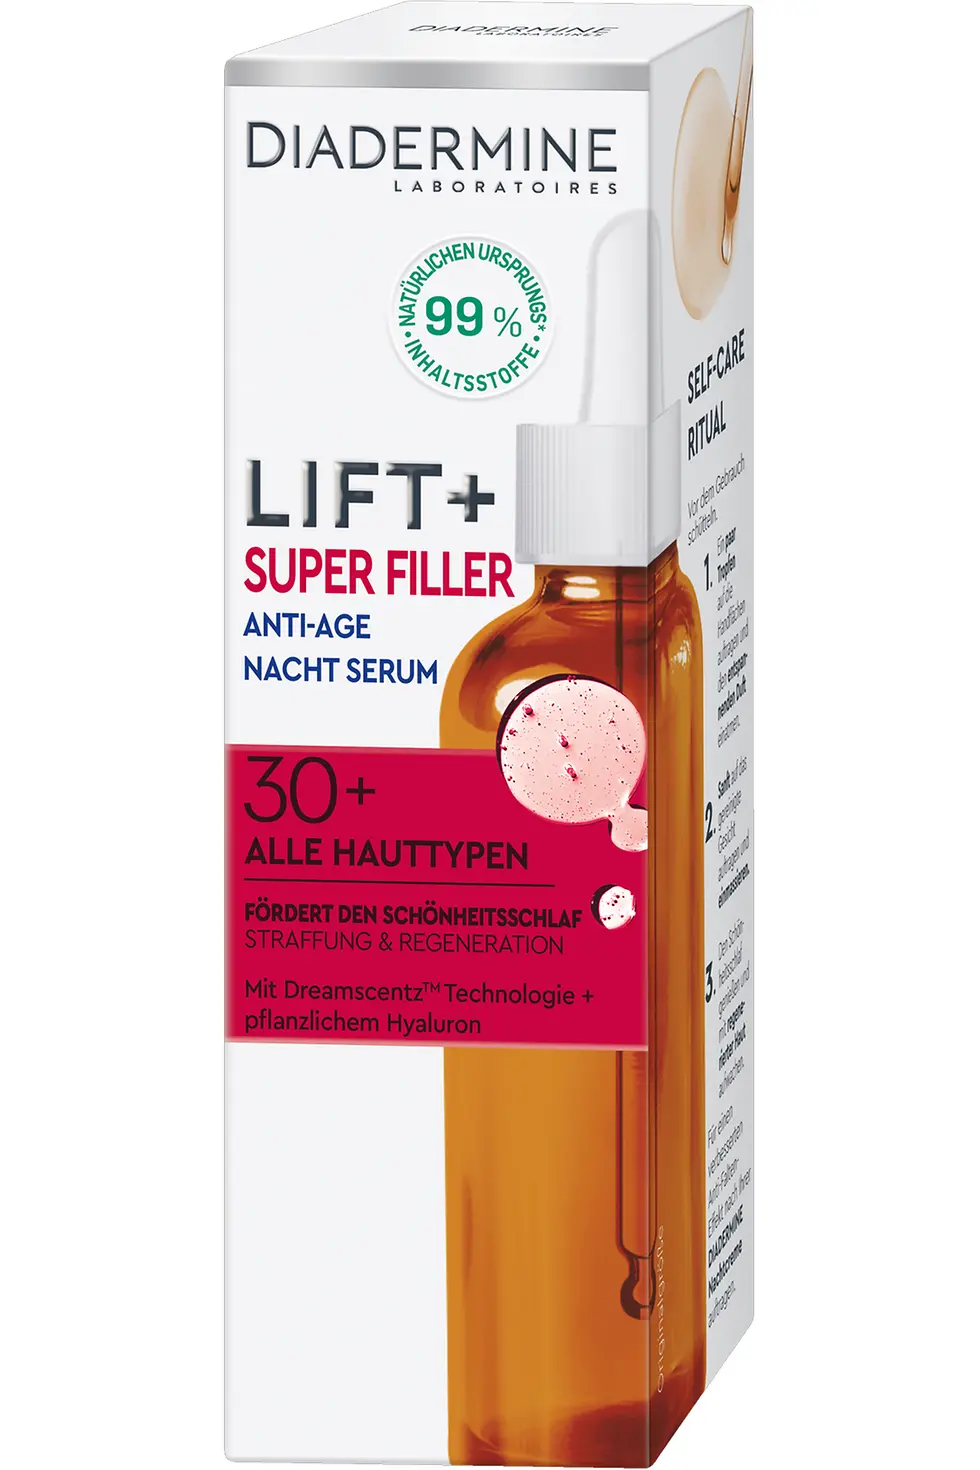 DIADERMINE LIFT+ SUPER FILLER ANTI-AGE NACHT SERUM (Verpackung)